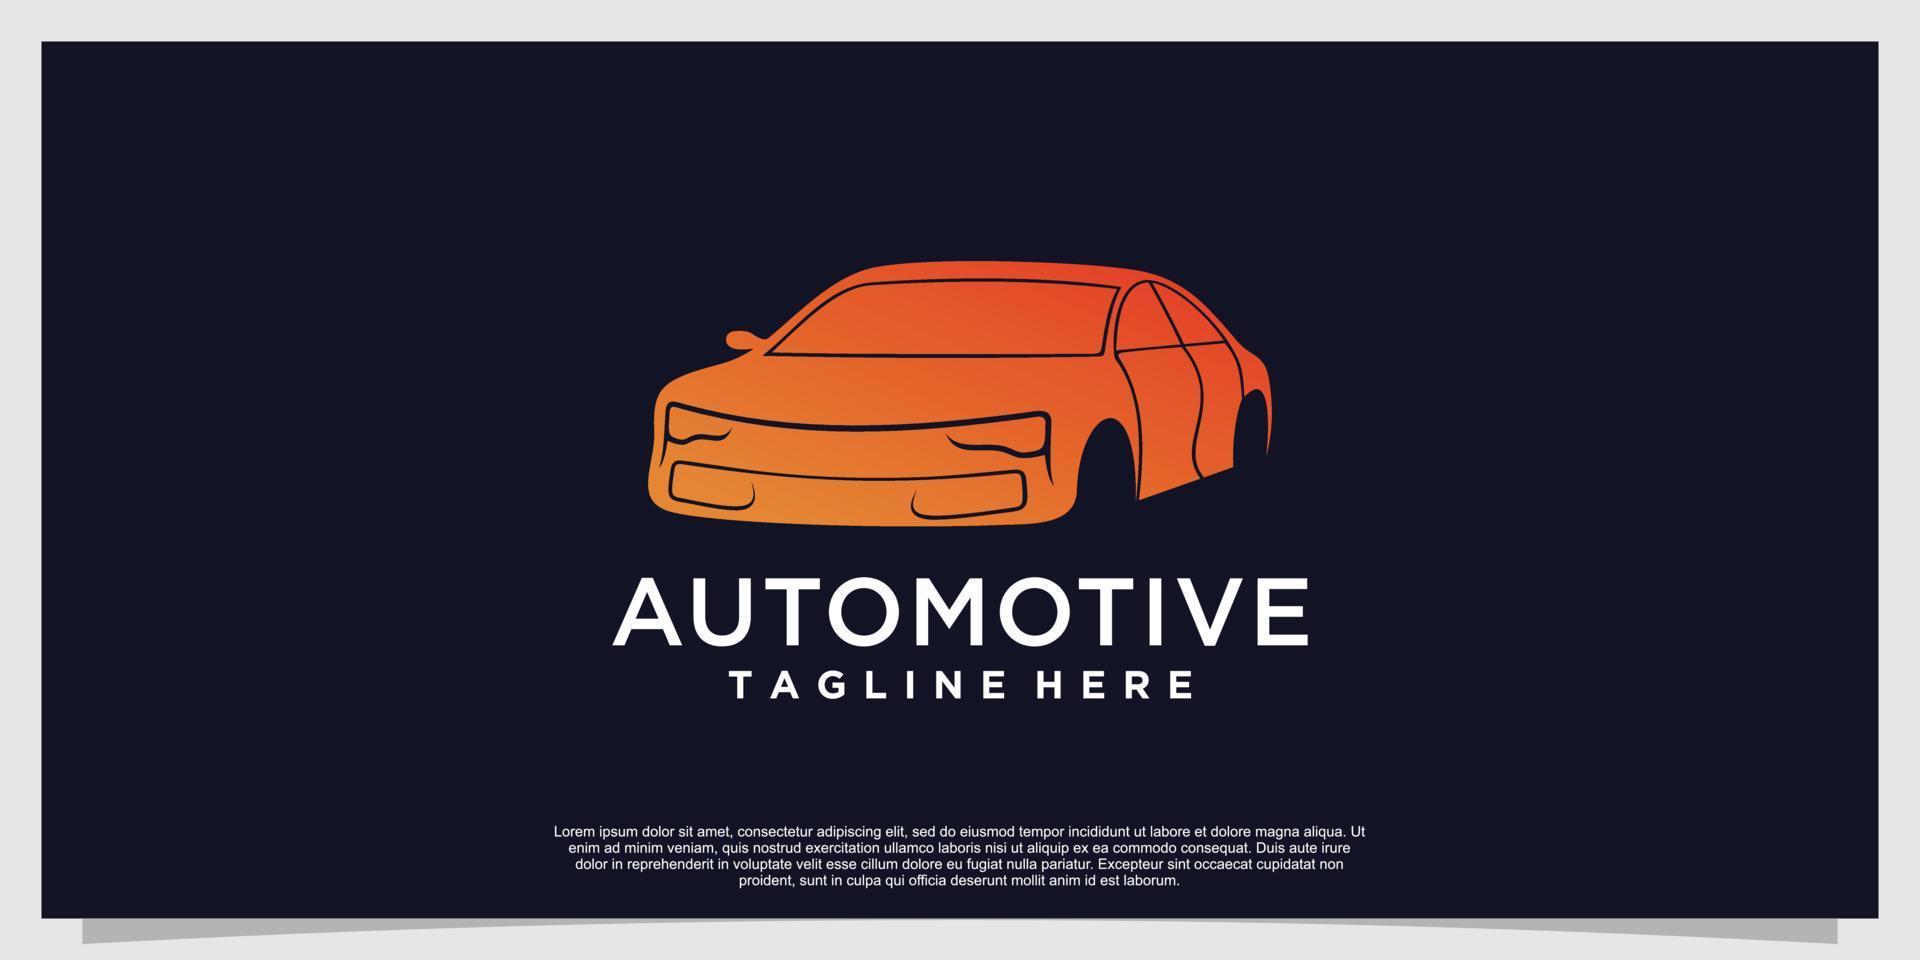 Automobil-Auto-Logo-Design mit Konzept-Premium-Vektor vektor